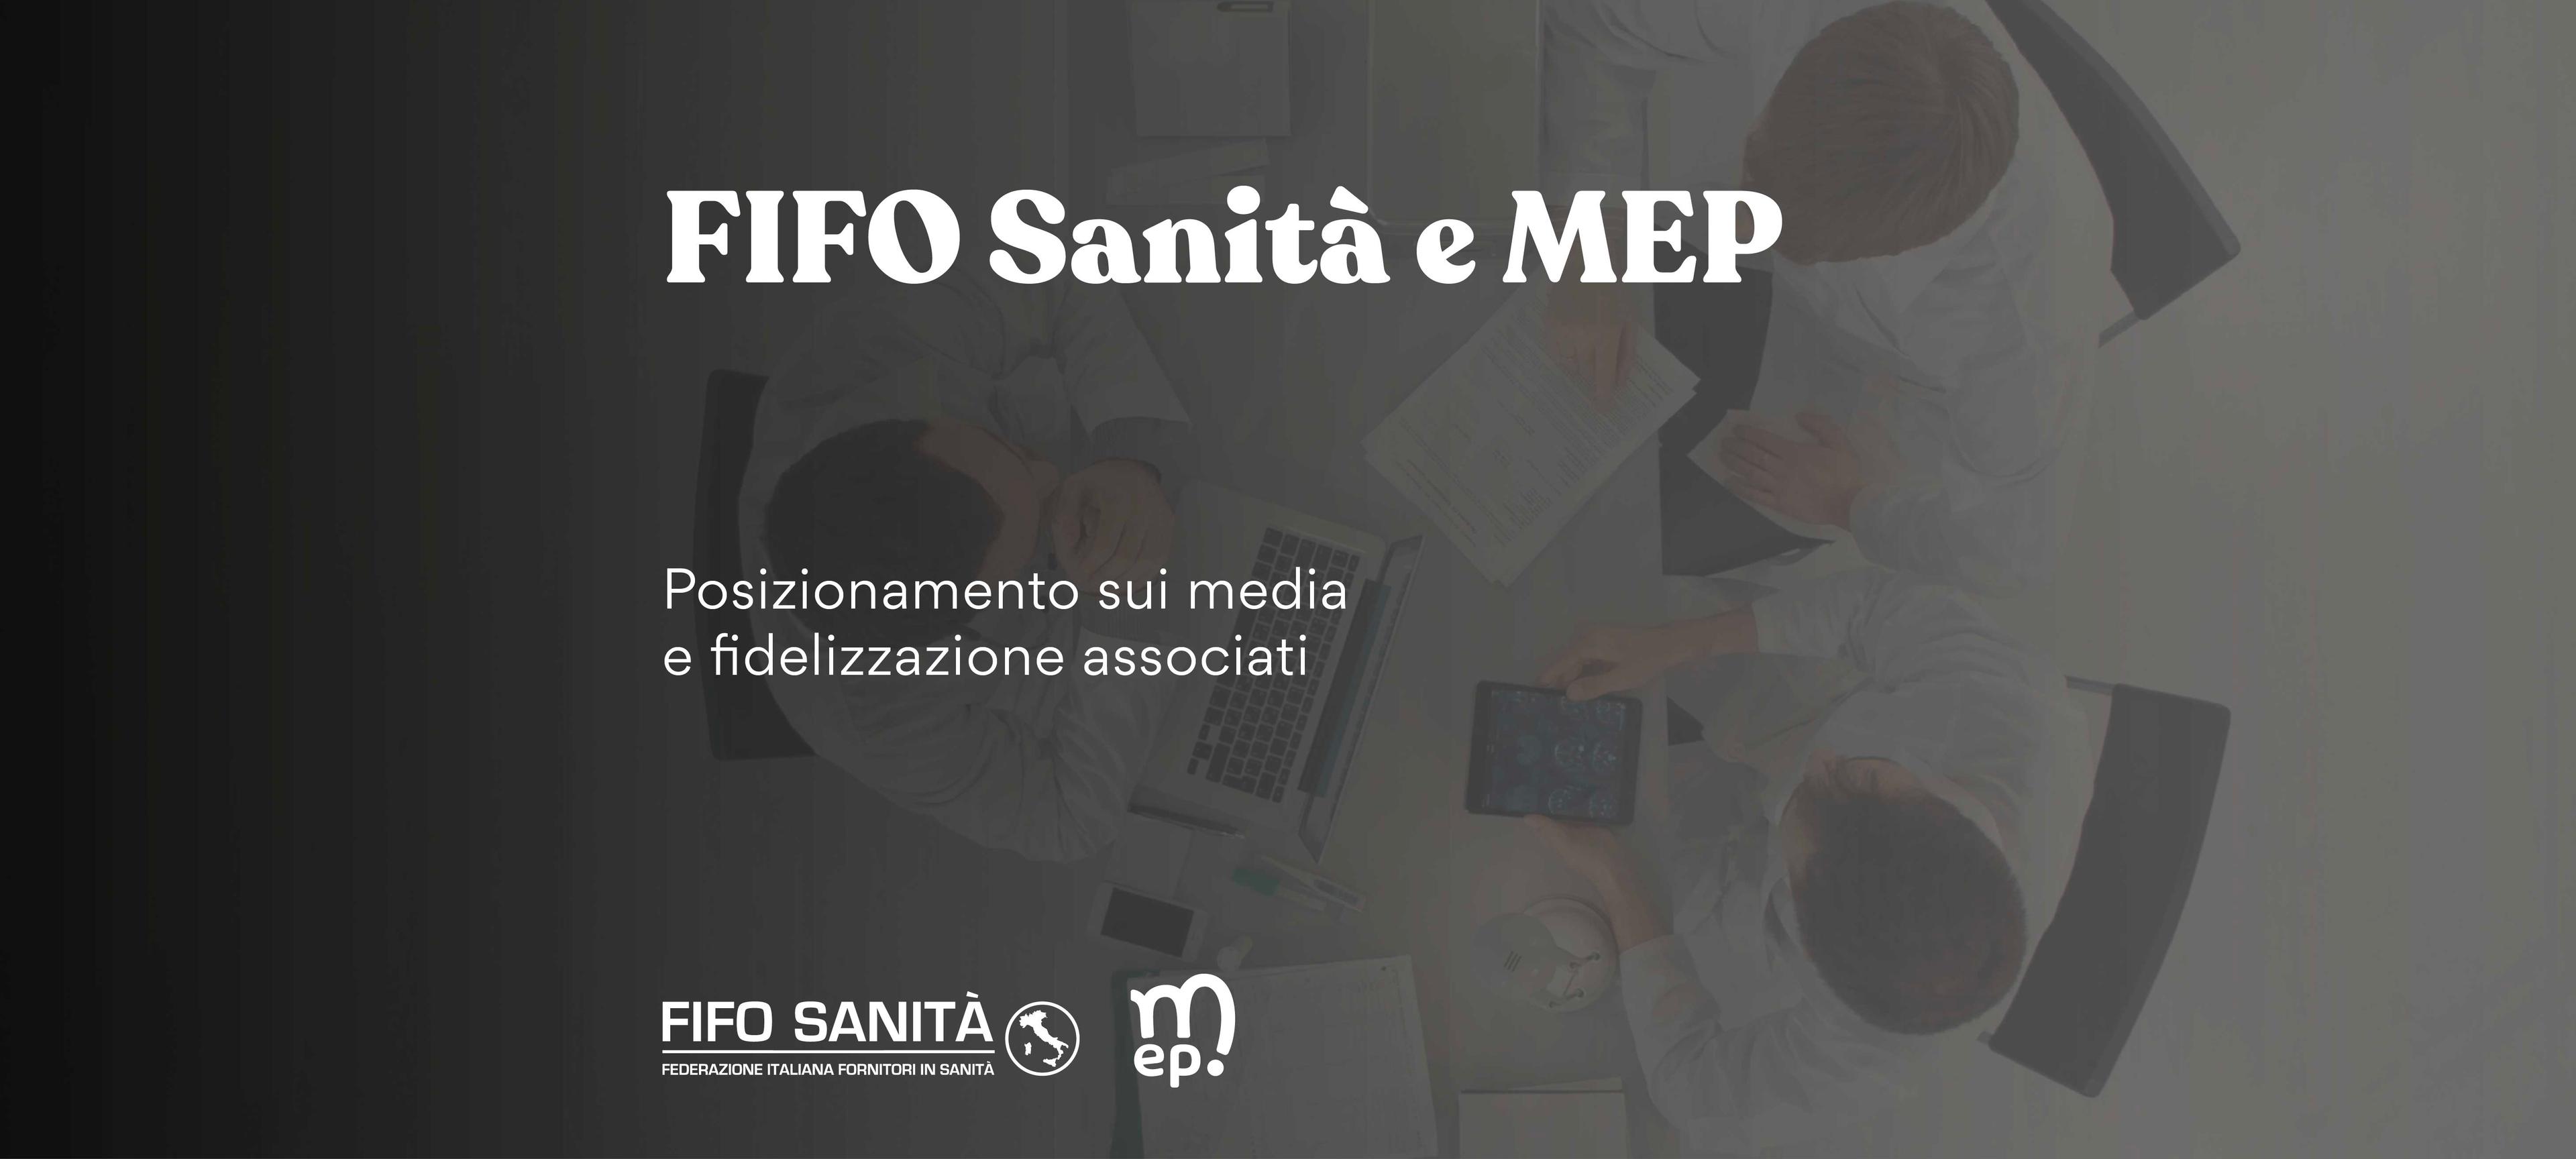 FIFO Sanità e MEP